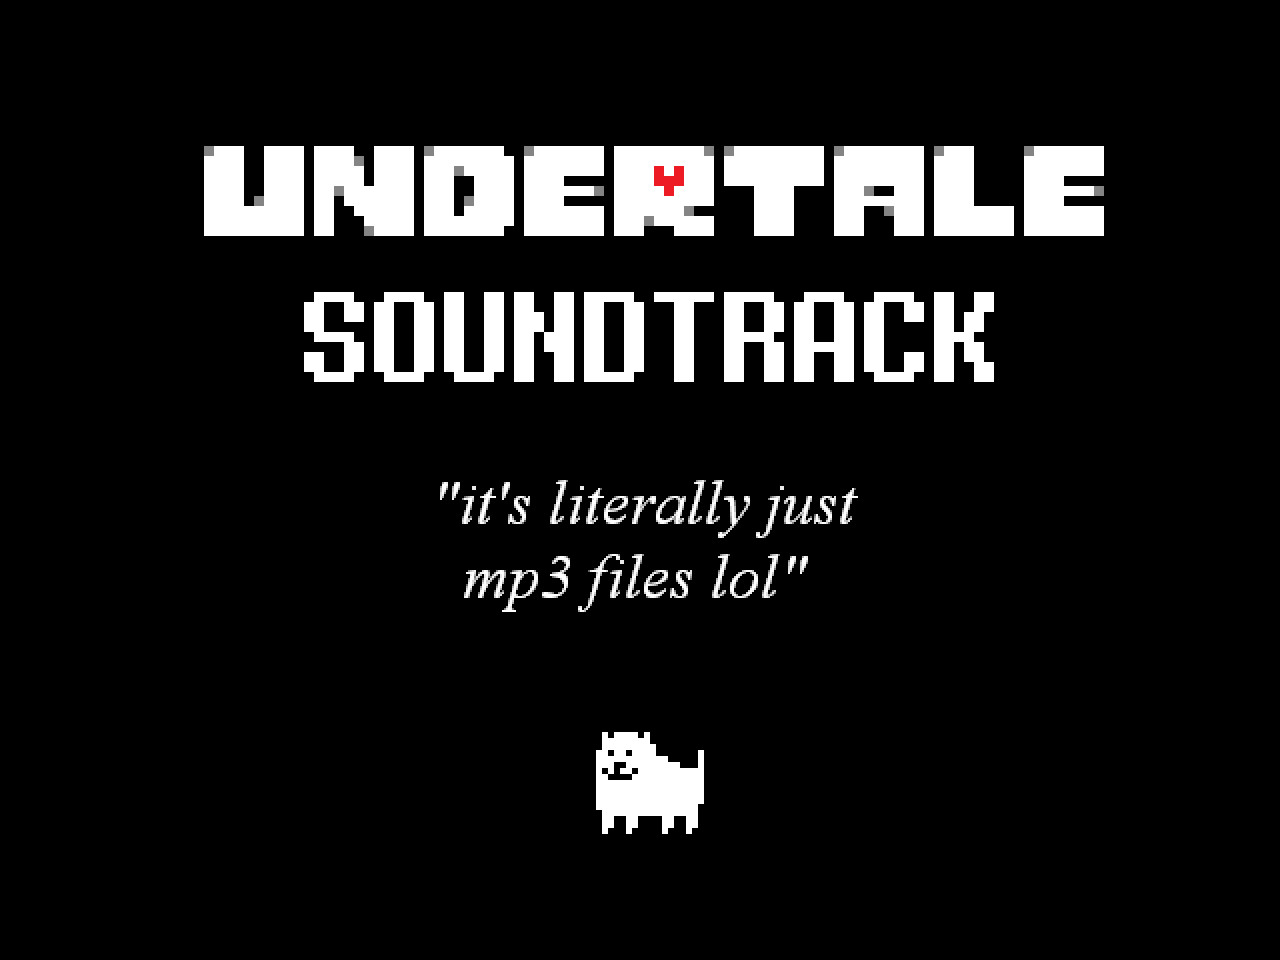 Save 70% on UNDERTALE Soundtrack on Steam